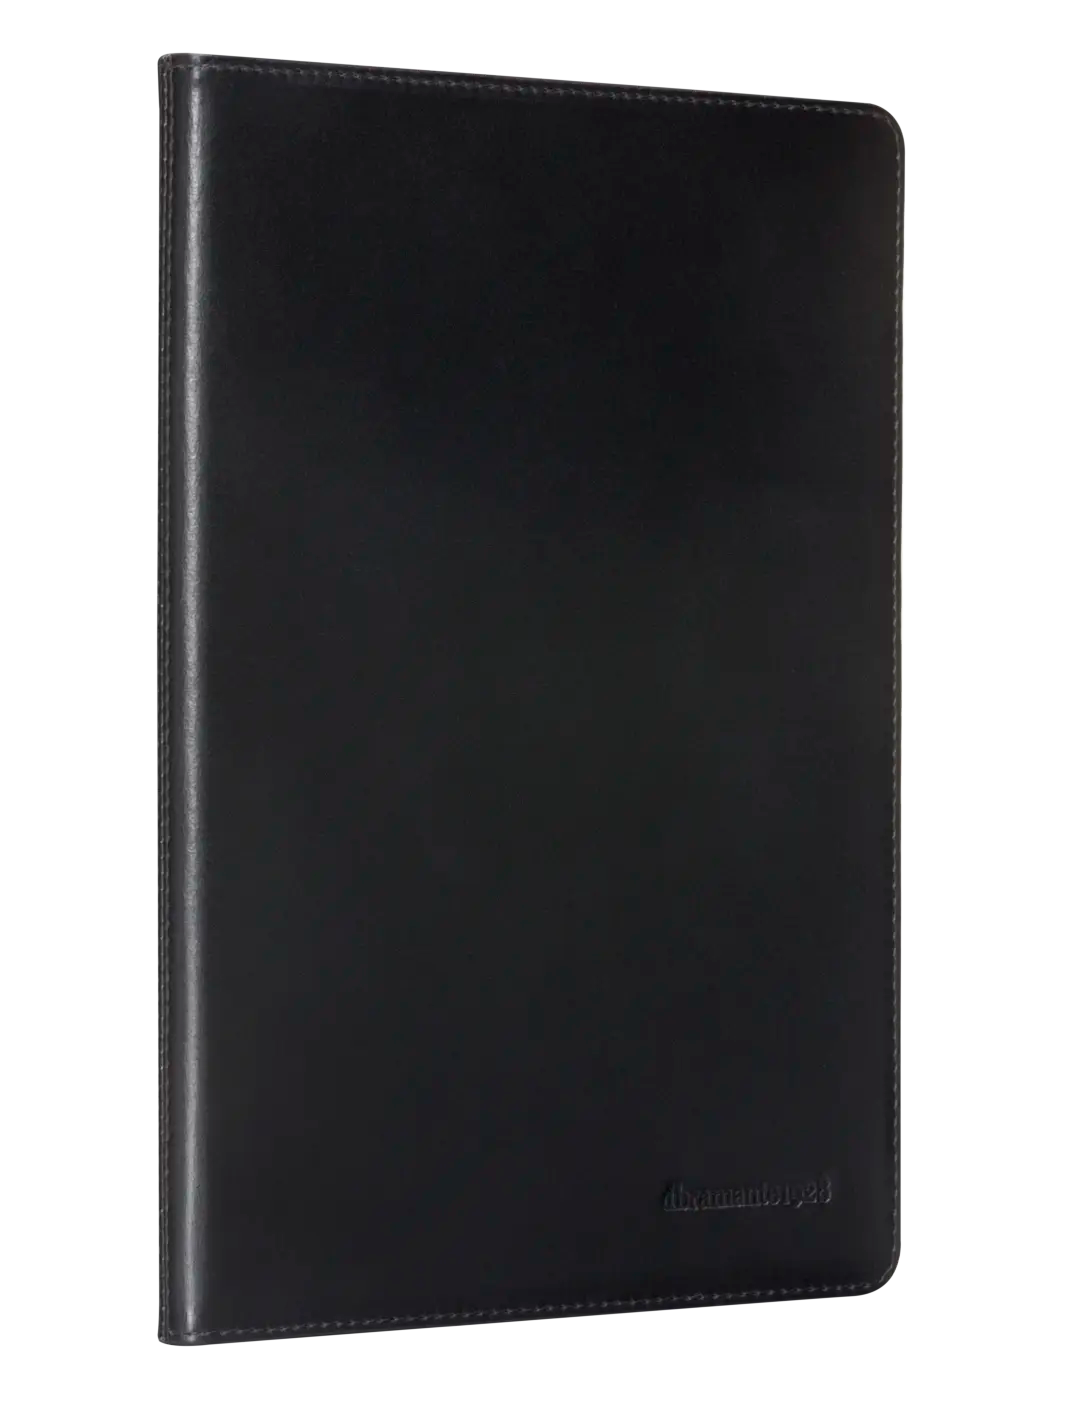 Copenhagen tablet cases Black iPad Air 10.9 Pro 11" iPad Cases